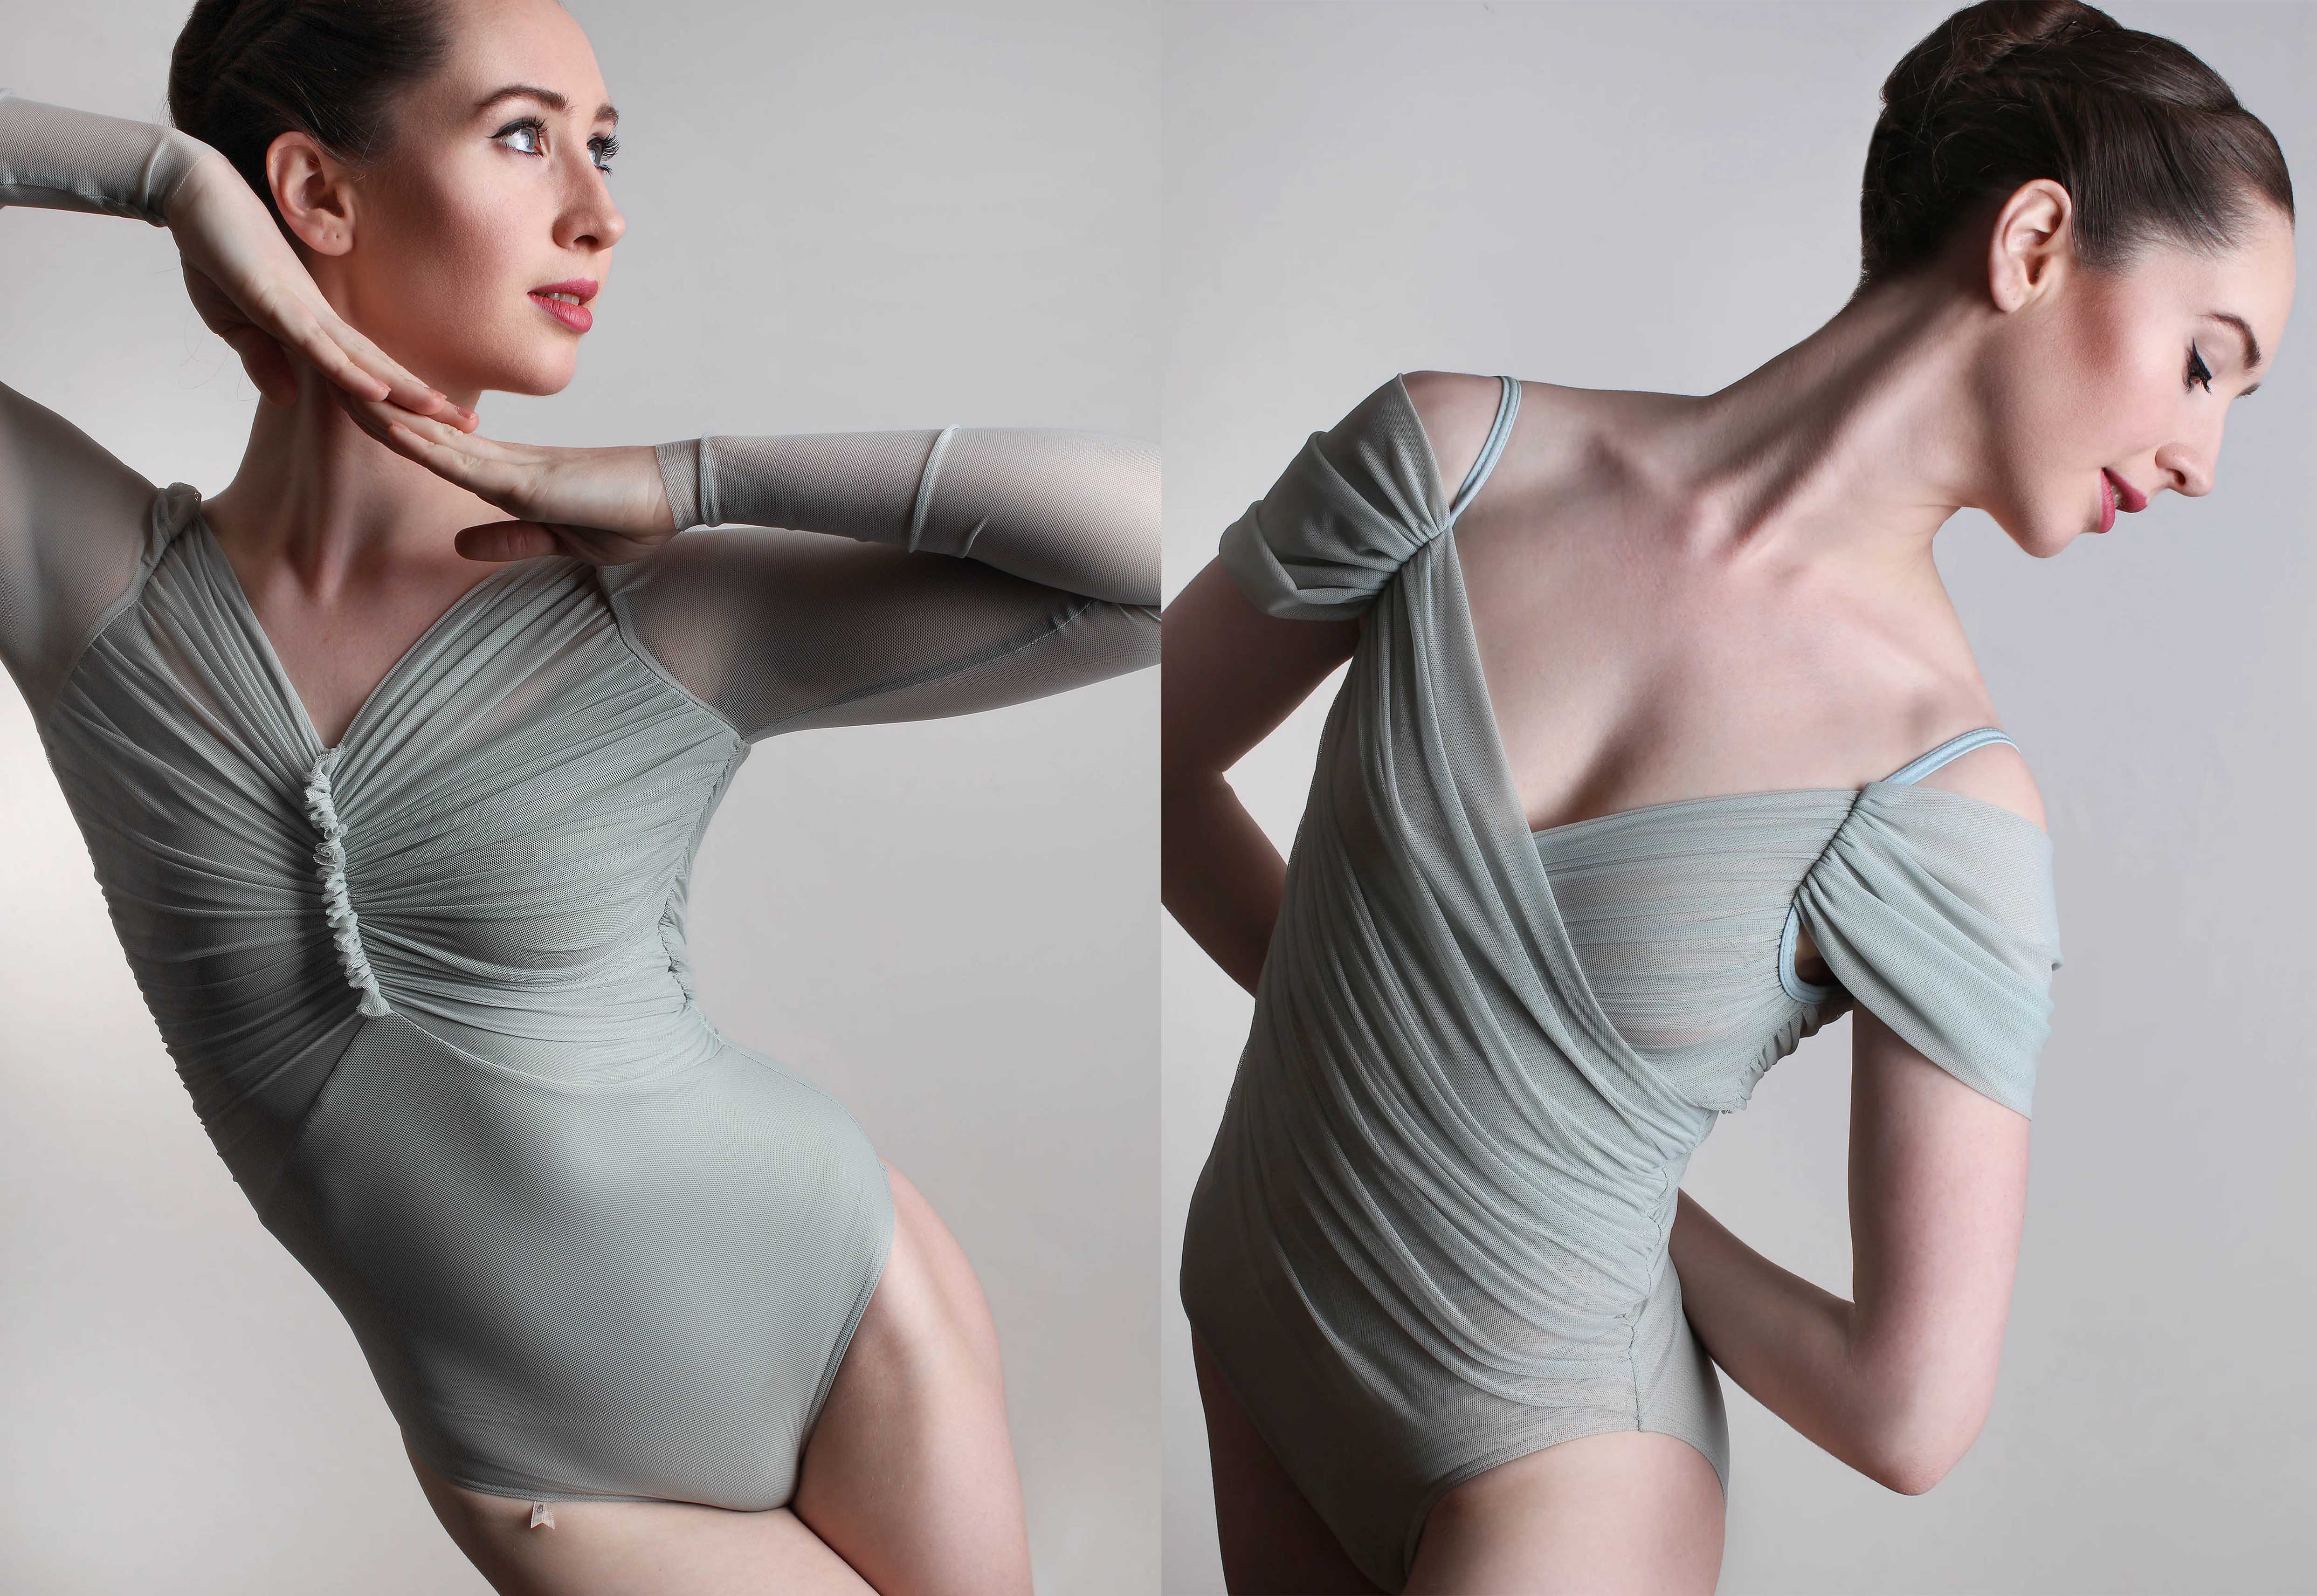 Stage Wear Nude Ballet Underwear Women Adult Gymnastics Long Sleeve Flesh  Skin Color Leotard Swimsuit Dance Bodysuit